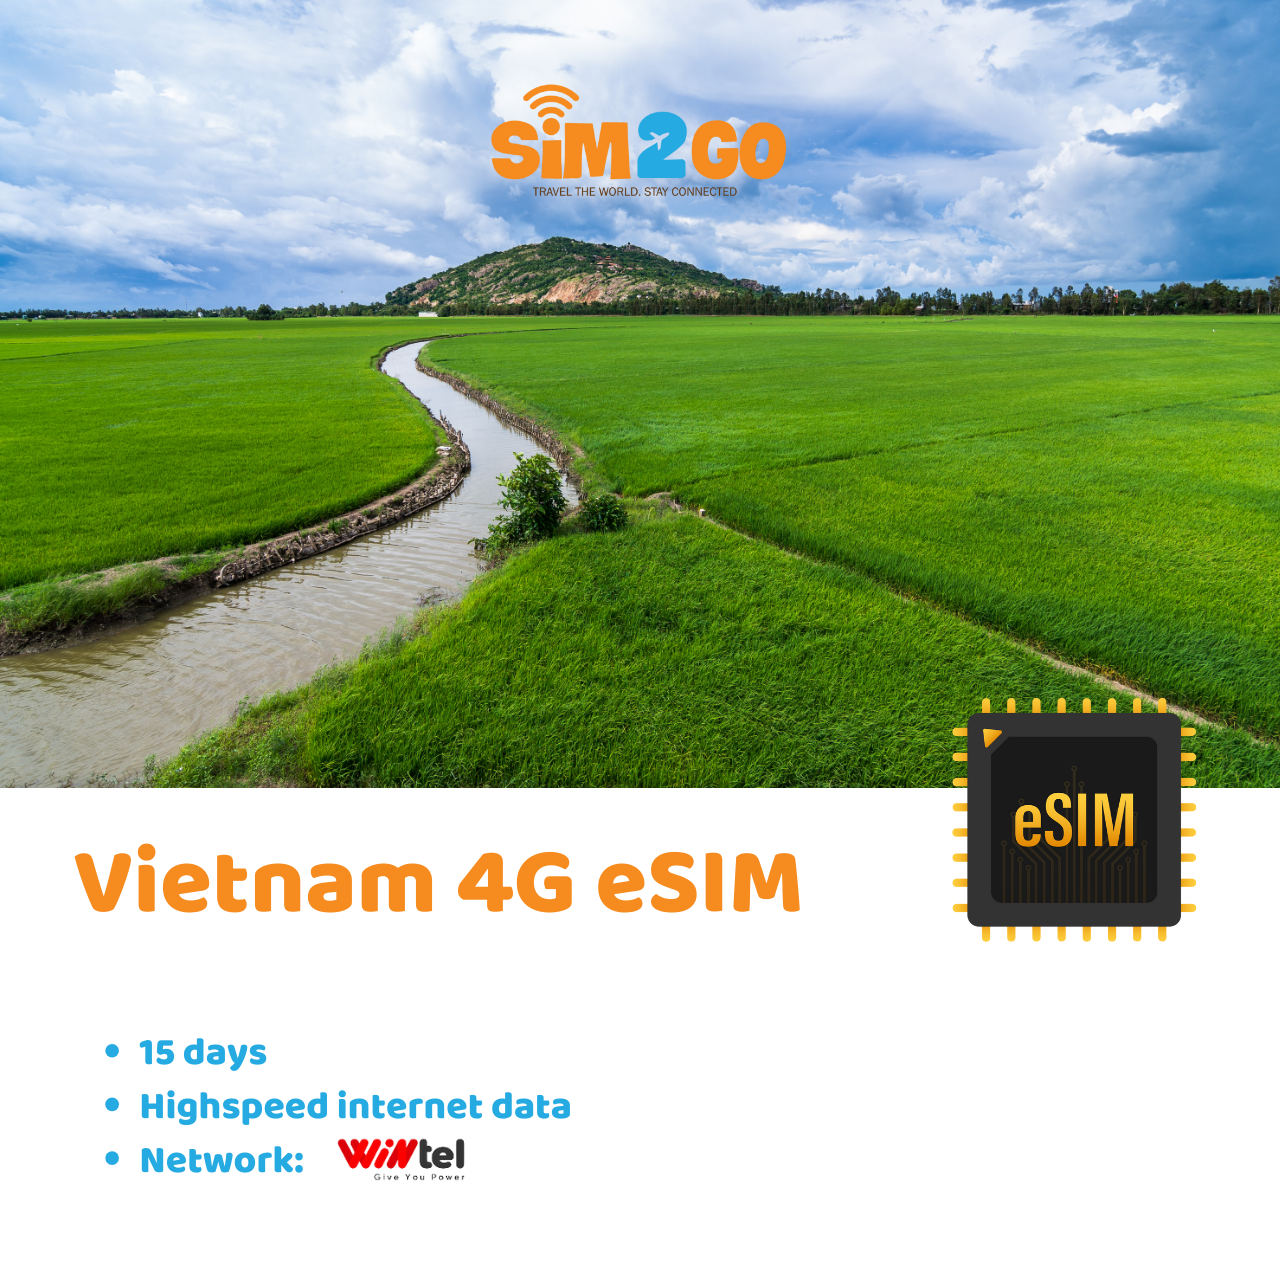 vietnam-esim-for-15-days